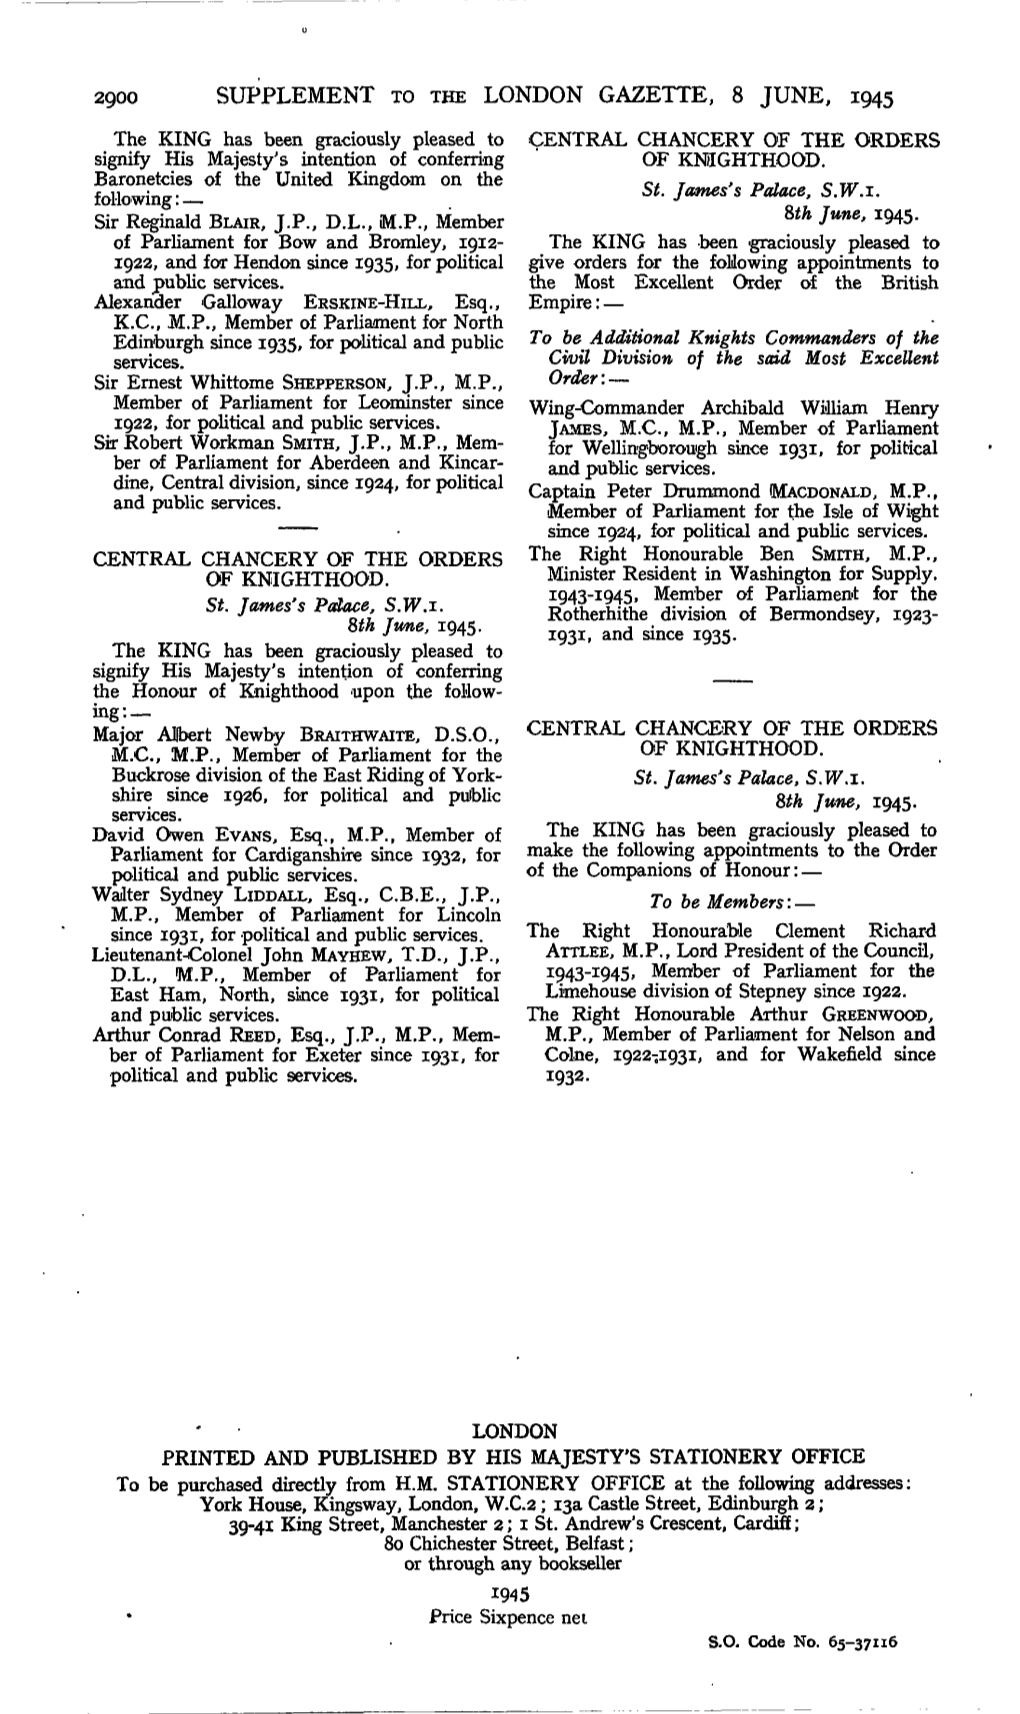 Supplement to the London Gazette, 8 June, 1945